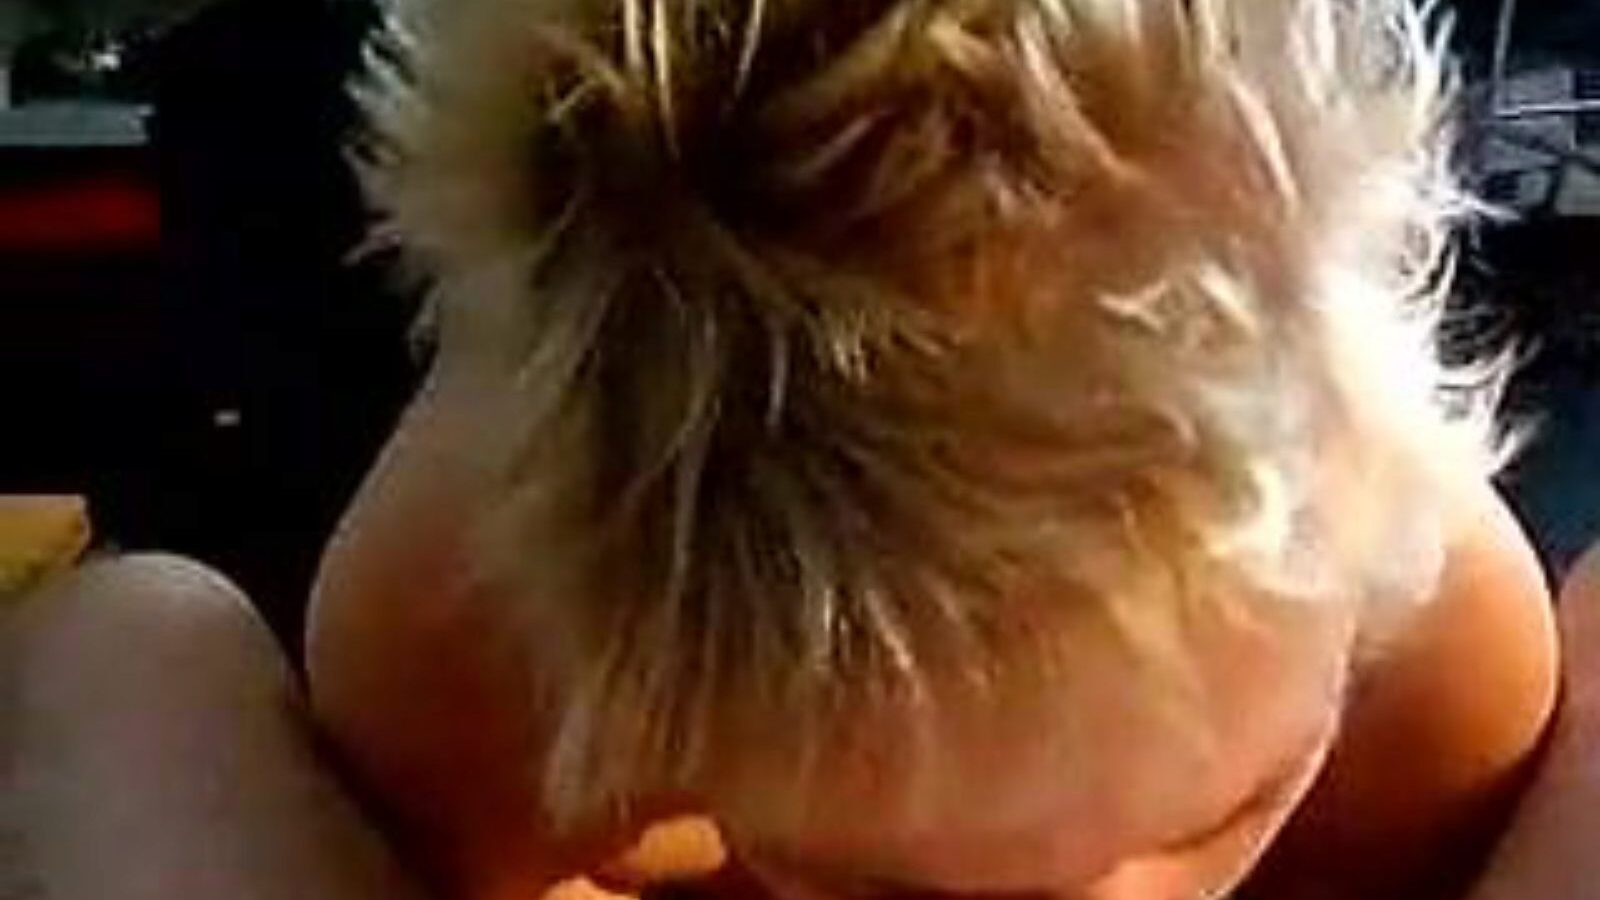 leuke dame: סרטון פורנו של ילדה תוצרת בית זקנה a6 - xhamster צפה ב leuke dame tube fuckfest movie בחינם ב- xhamster, עם האוסף הכי חם של ילדות תוצרת בית הולנדית, זקנה ומוצץ וידאו פורנוגרפיה